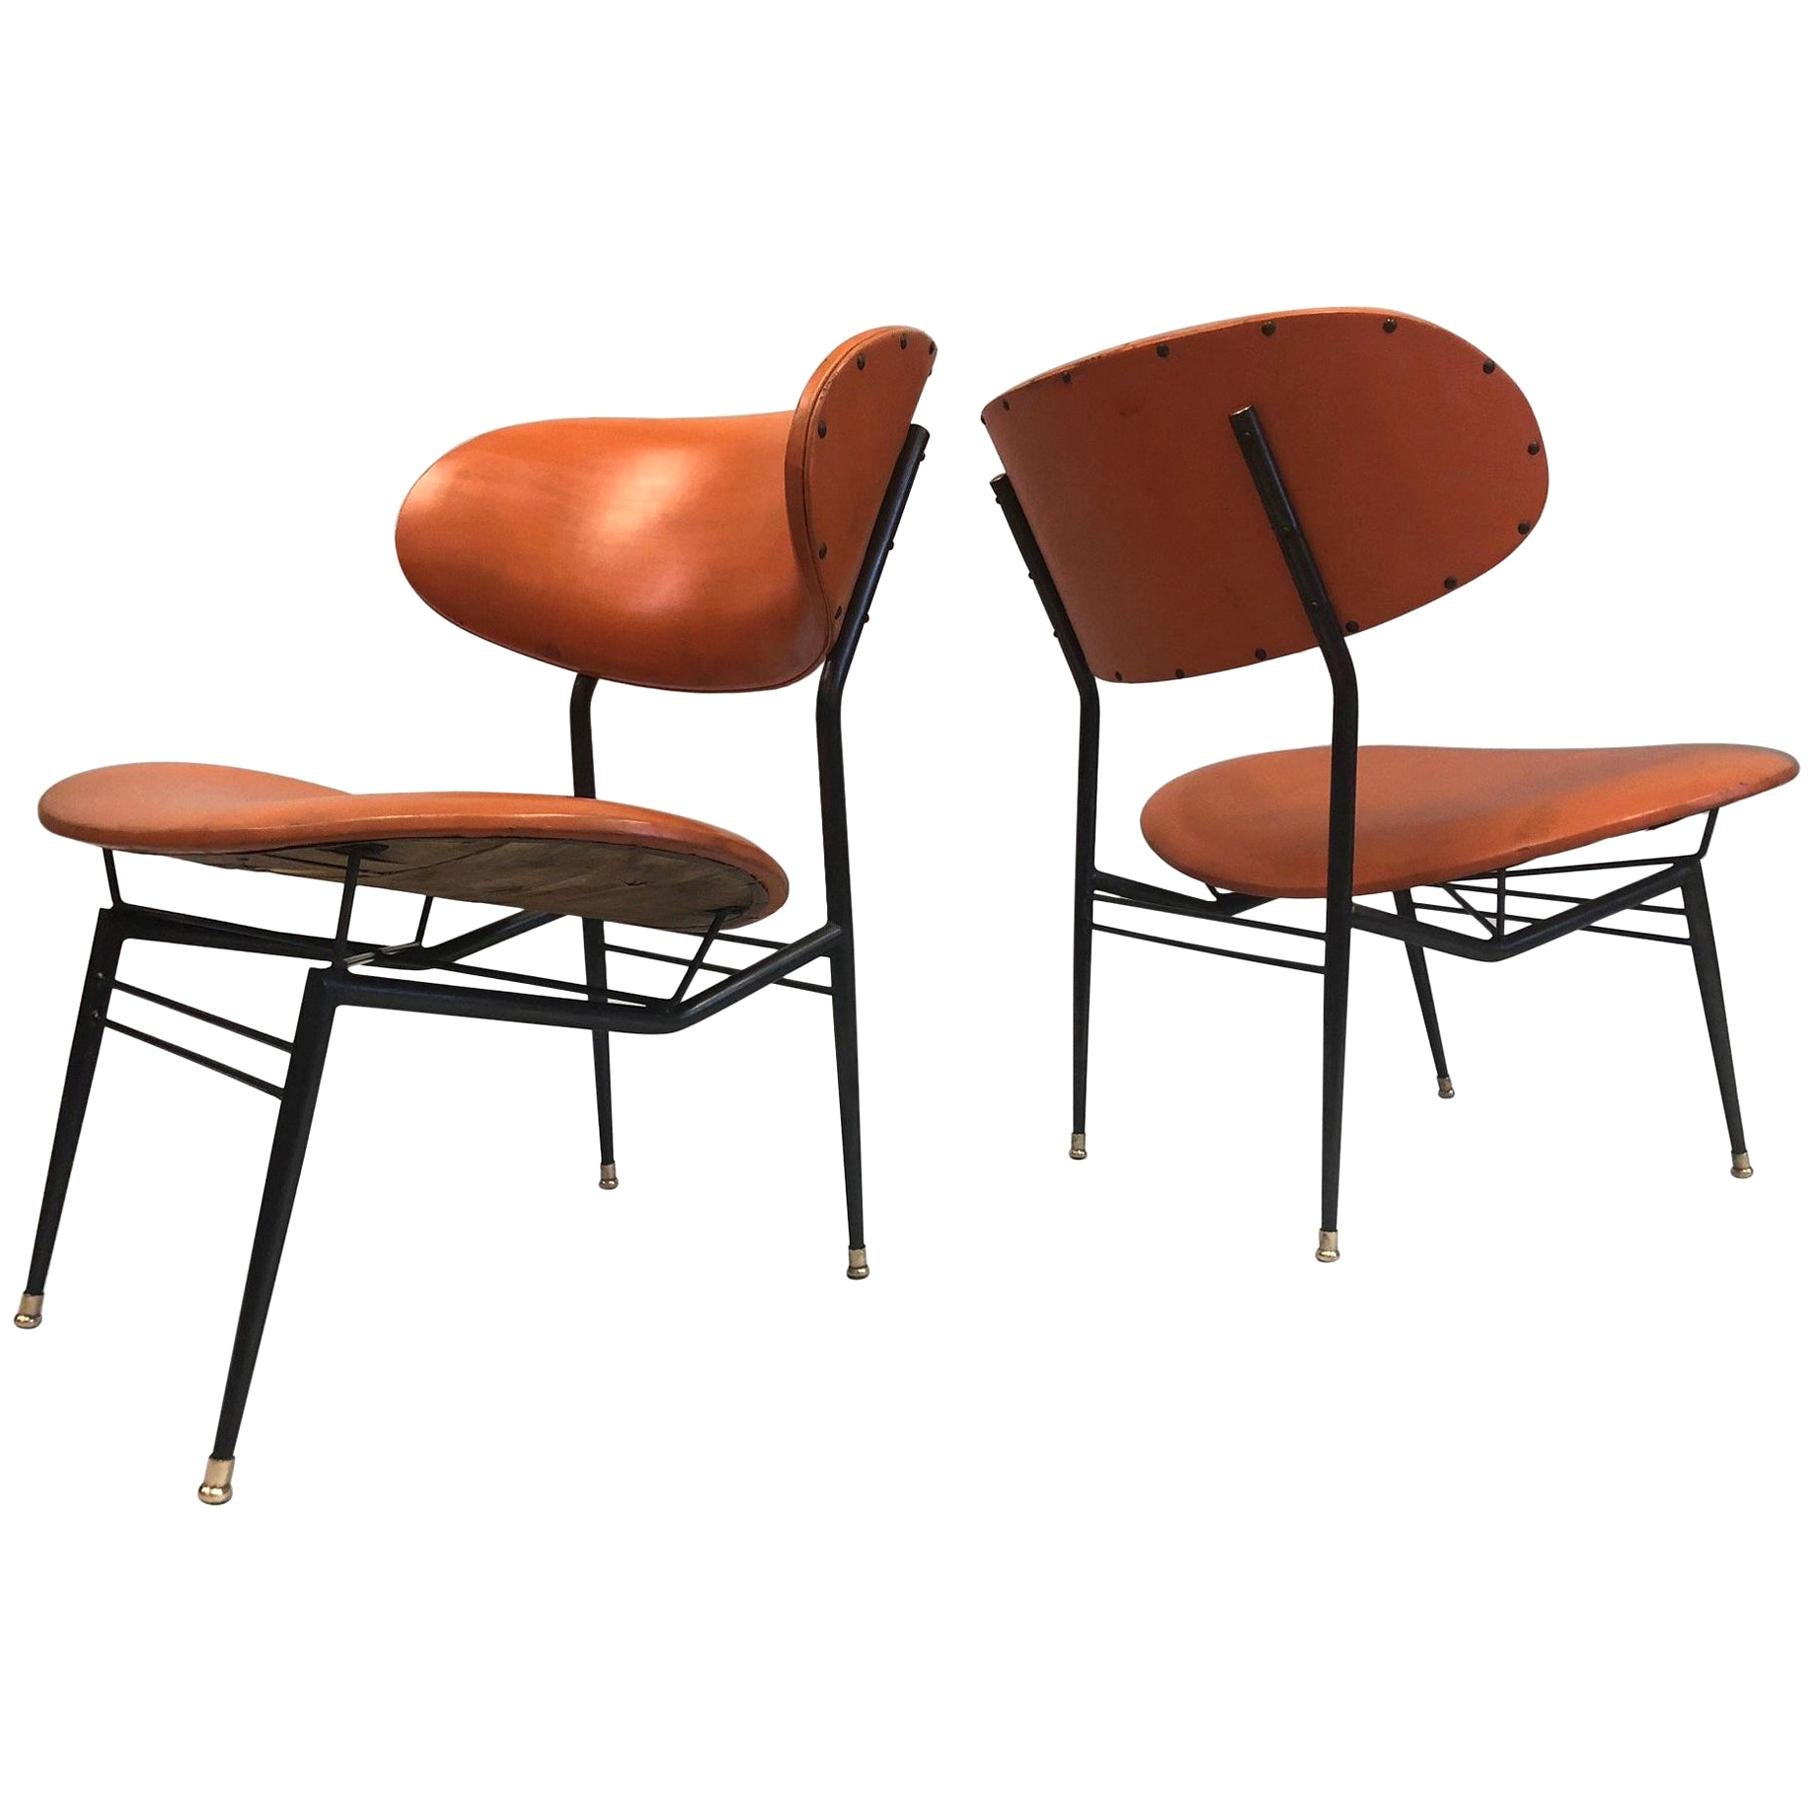 Two Pairs of Italian Mid-Century Modern Lounge Chairs by Gastone Rinaldi